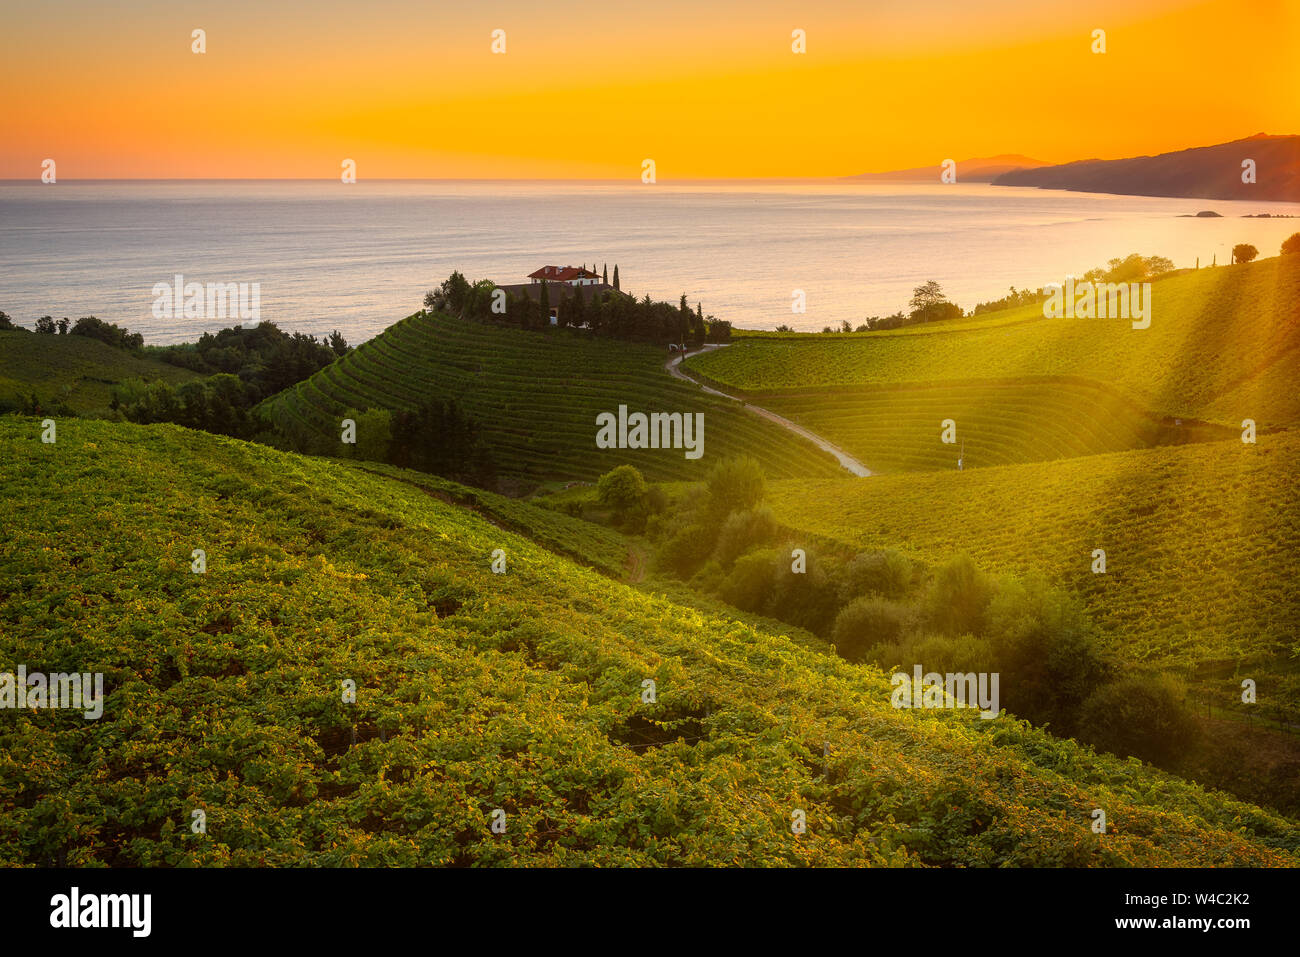 Txakoli white wine vineyards at sunrise, Cantabrian sea in the background, Getaria, Spain Stock Photo